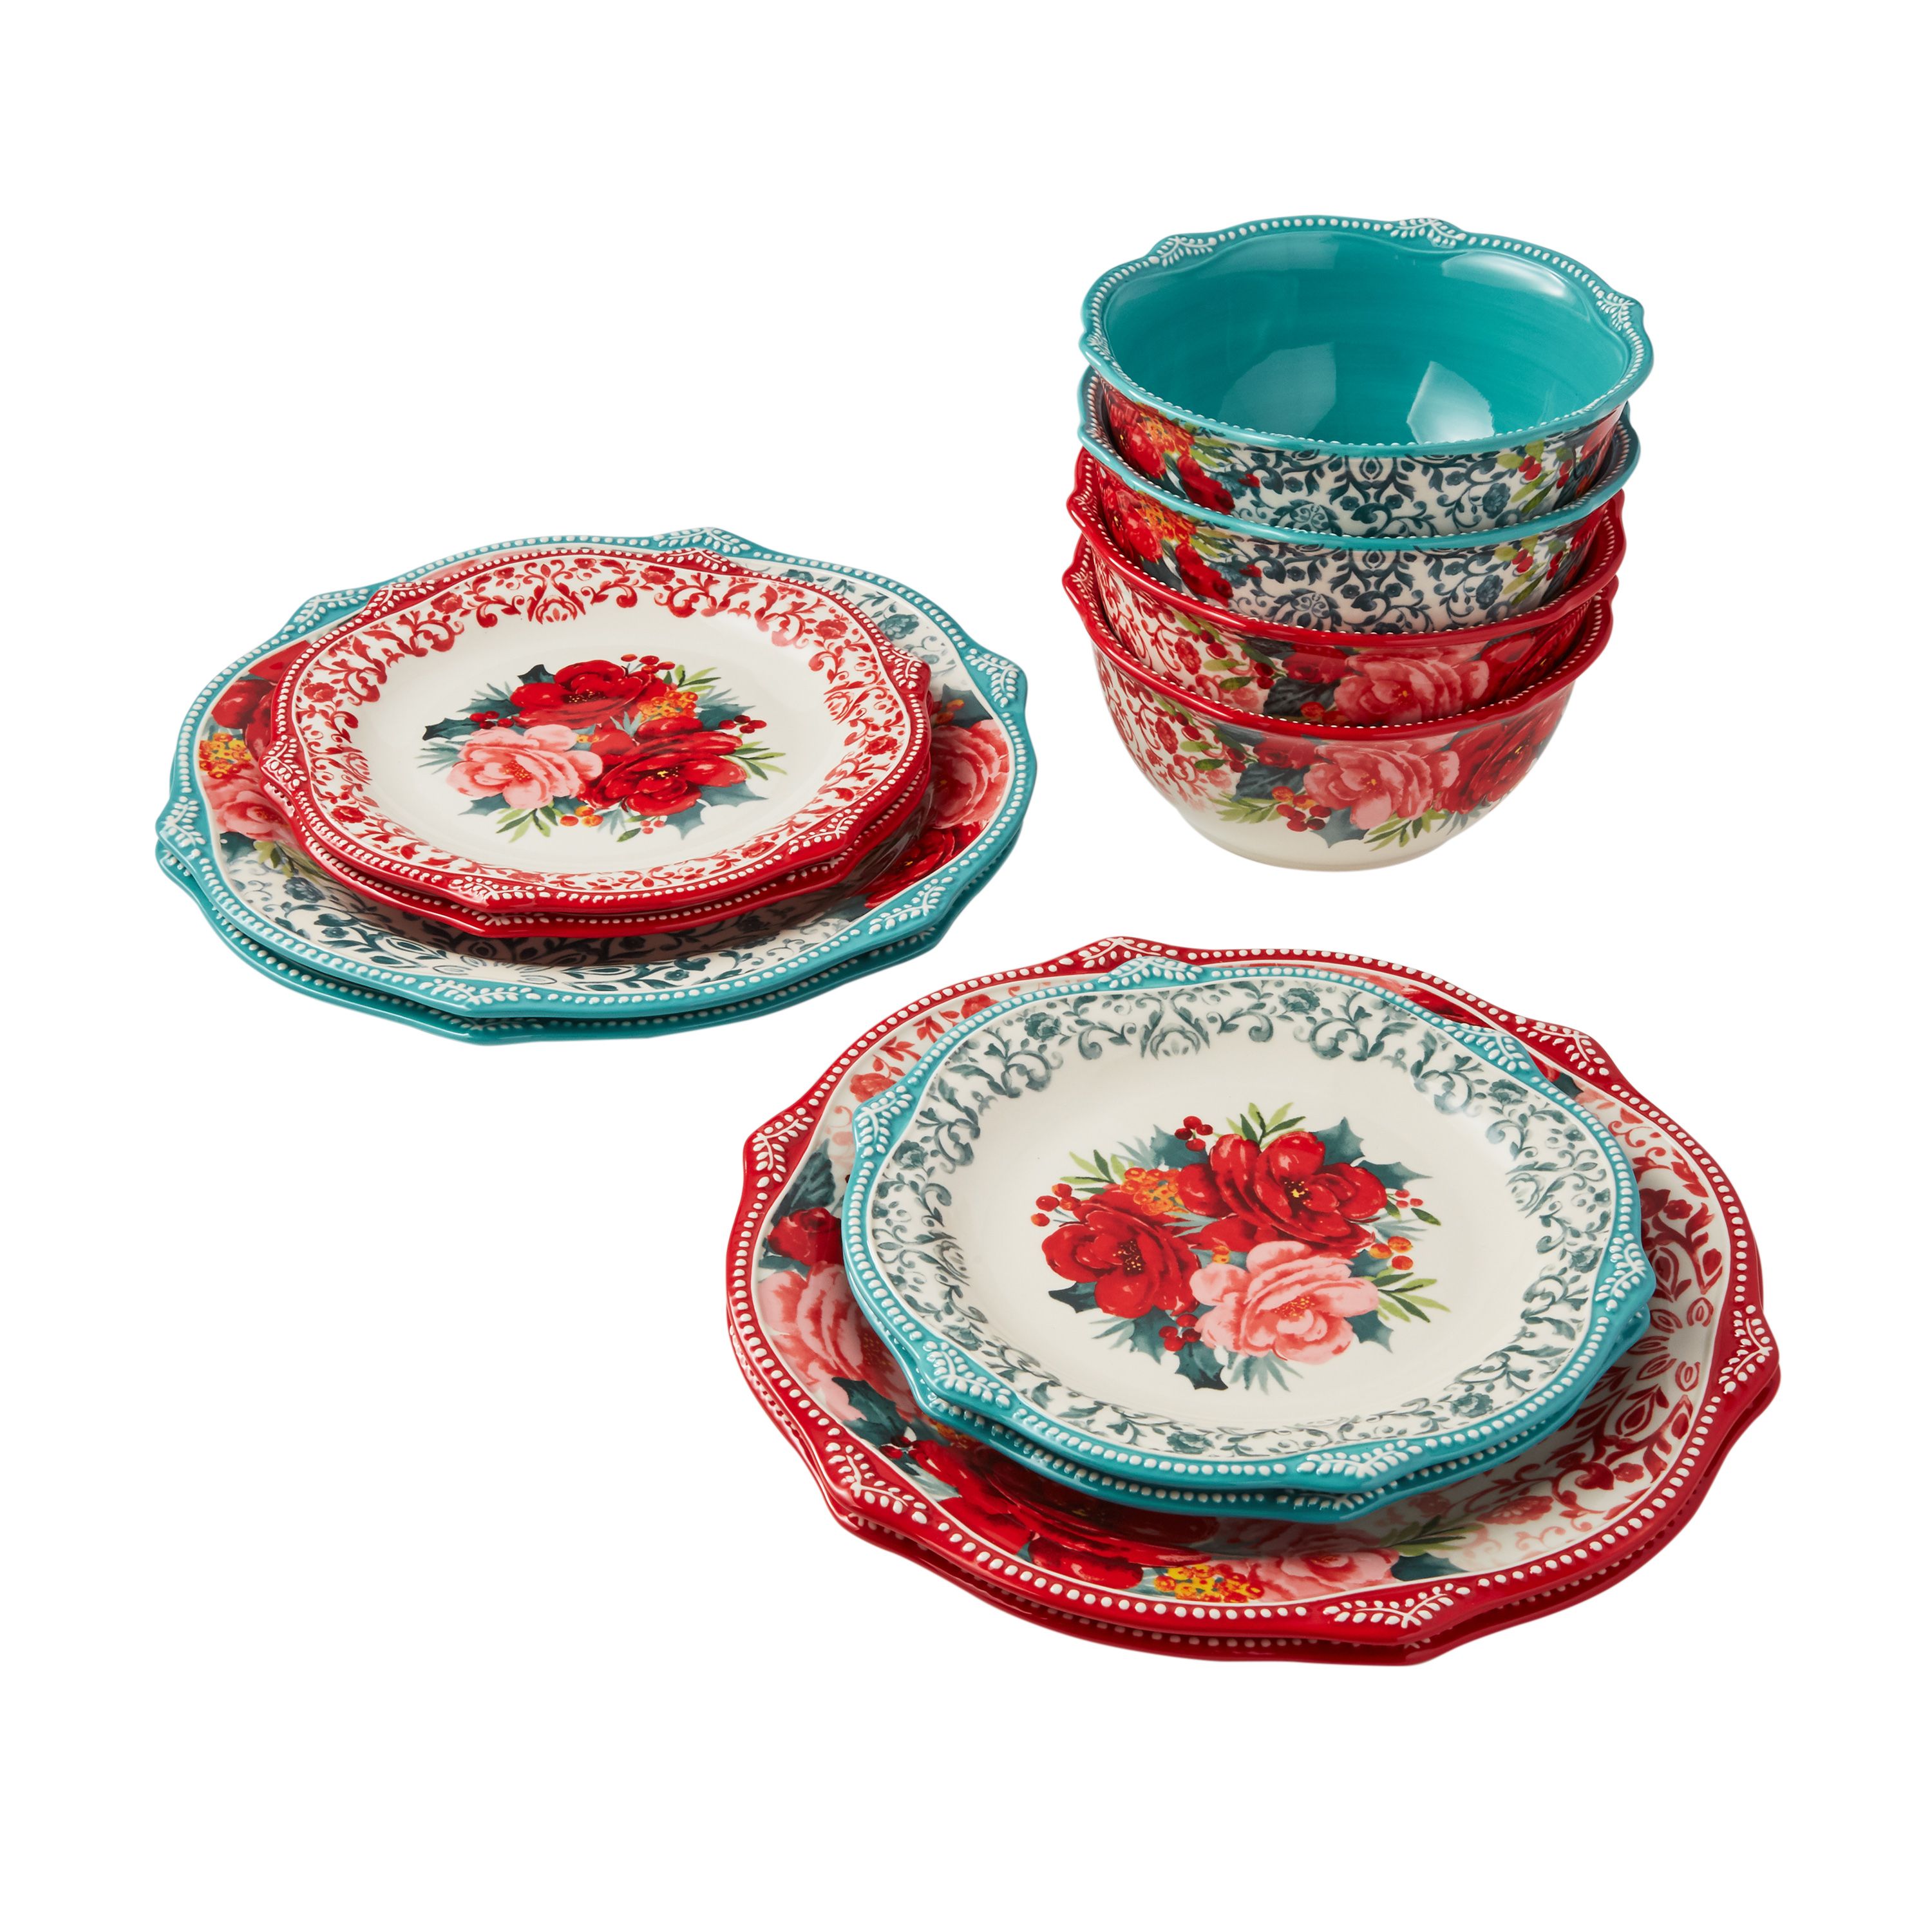 The Pioneer Woman Cheerful Rose Medallion 12-Piece Stoneware Holiday Dinnerware Set